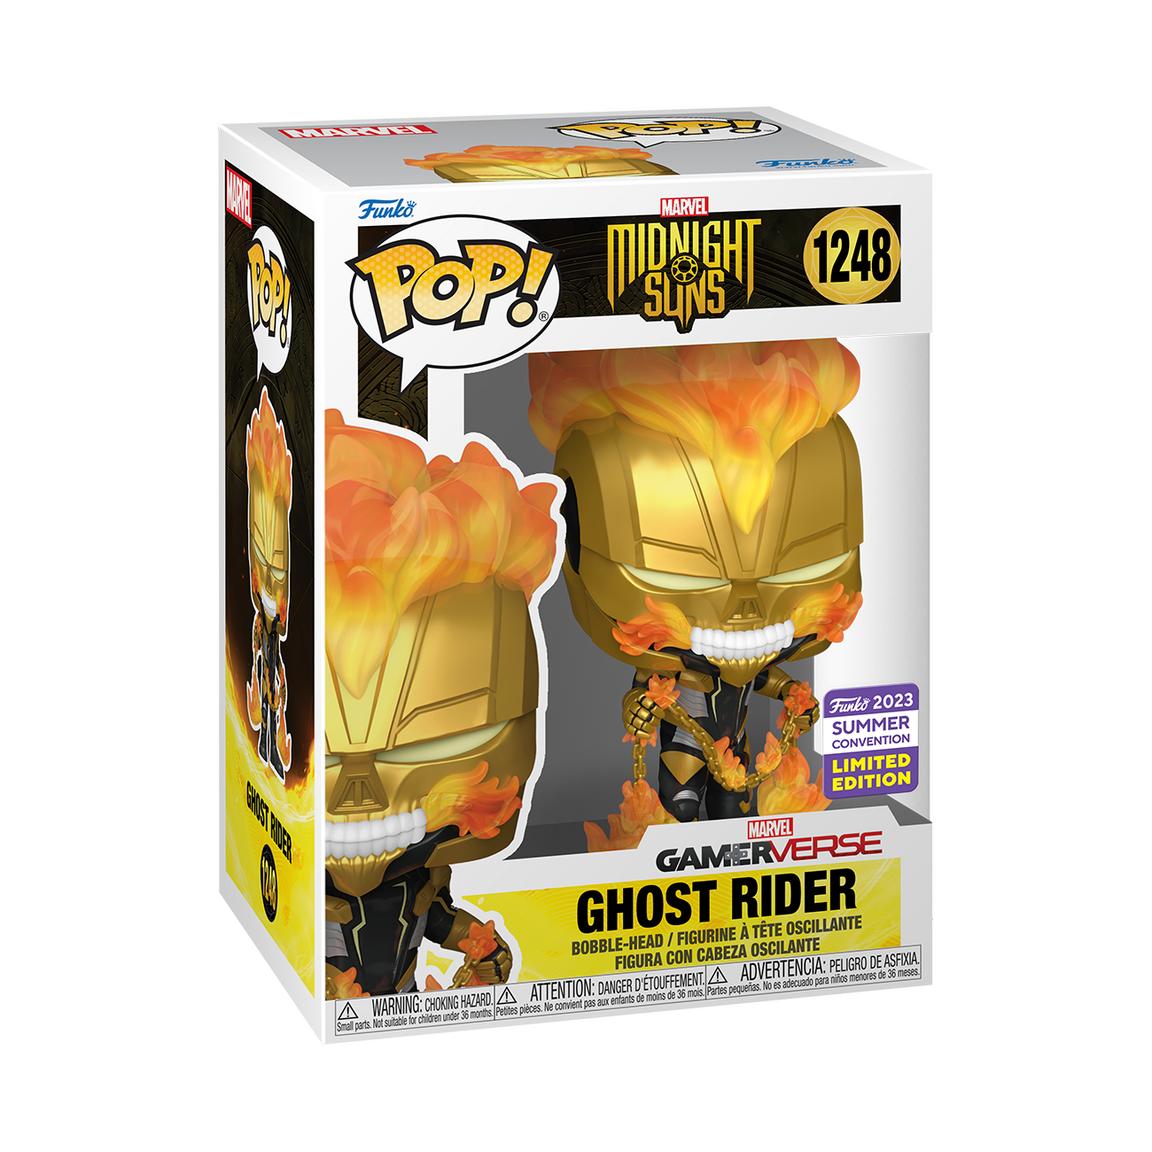 Ghost Rider Midnight Suns 2023 Summer Convention exclusive Pop!